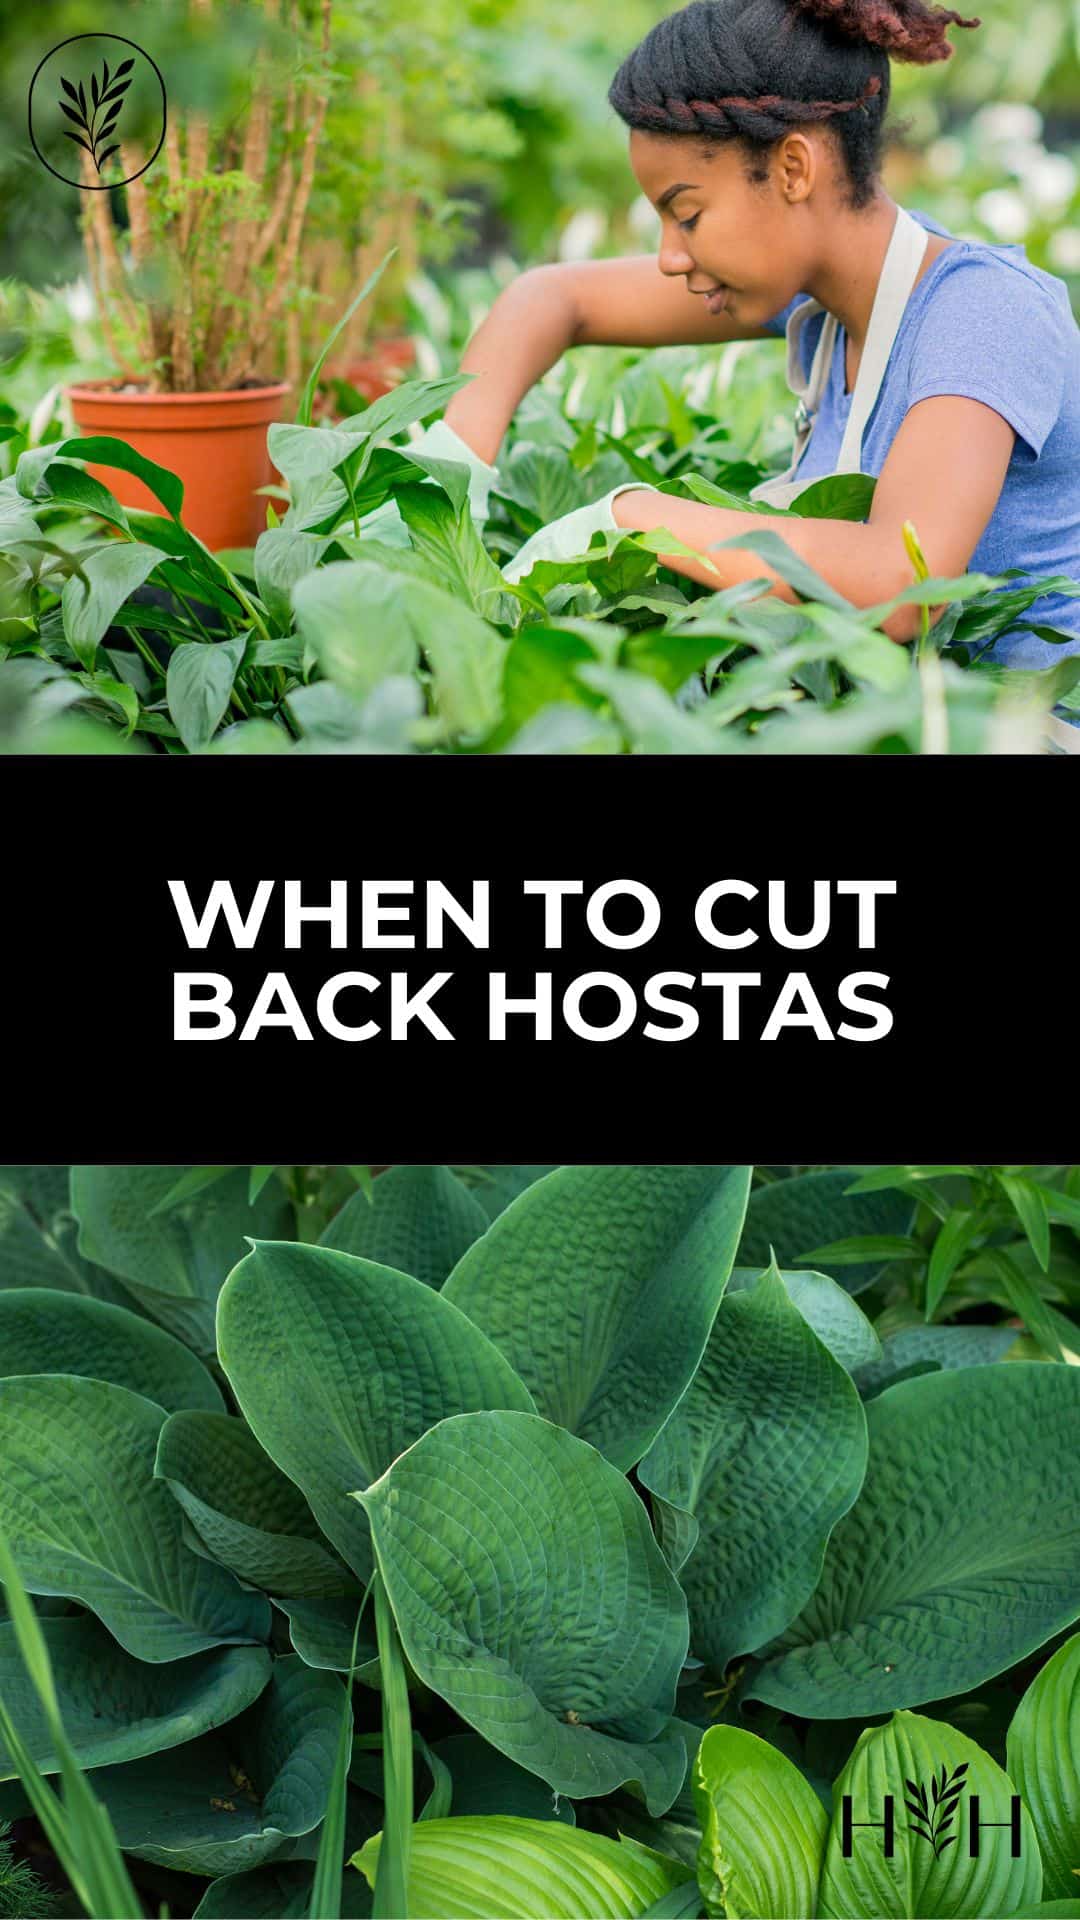 When to cut back hostas via @home4theharvest